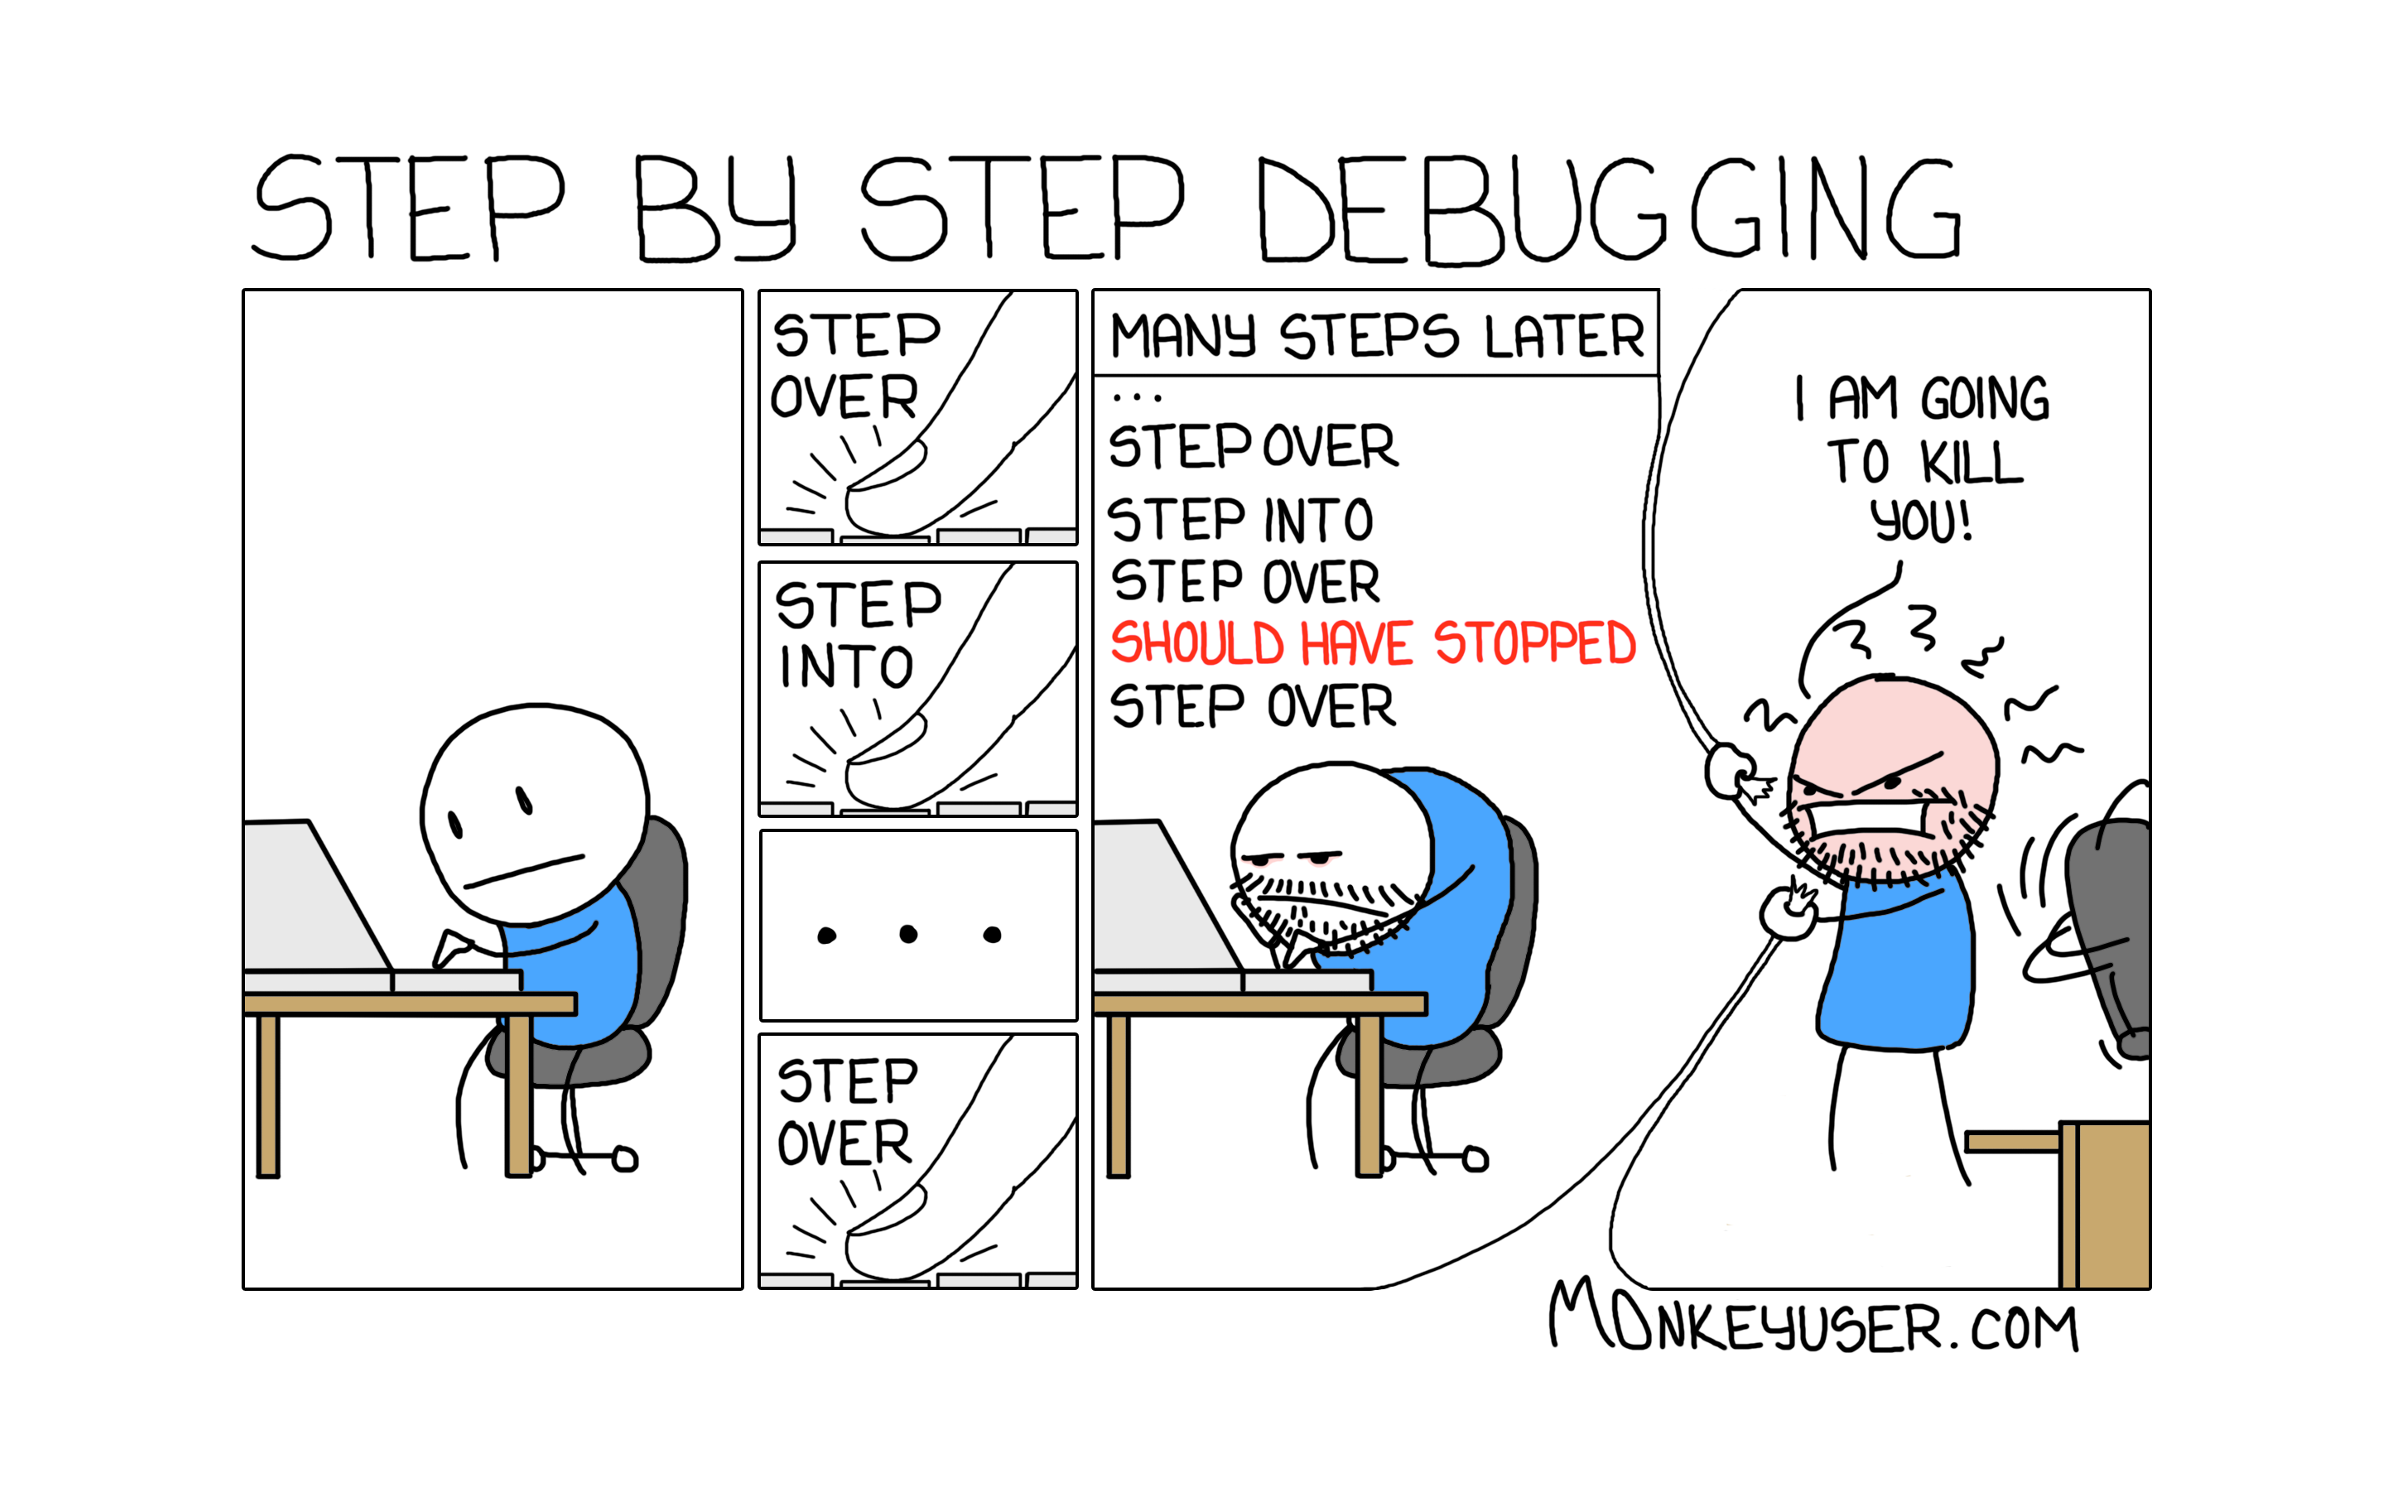 Keep stepping!